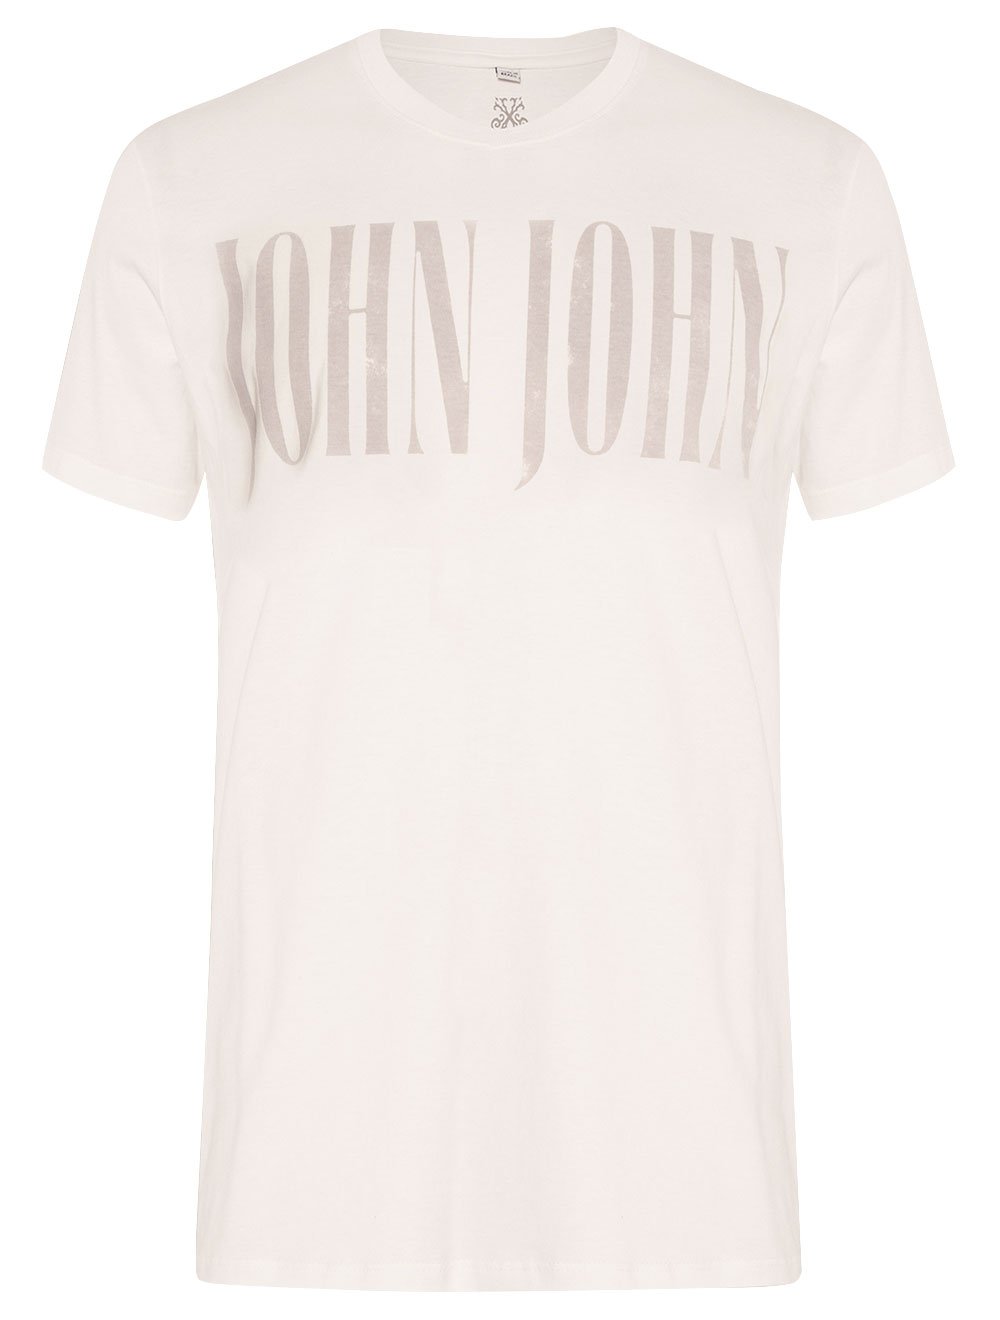 Camiseta John John Logo Branco - Outlet360